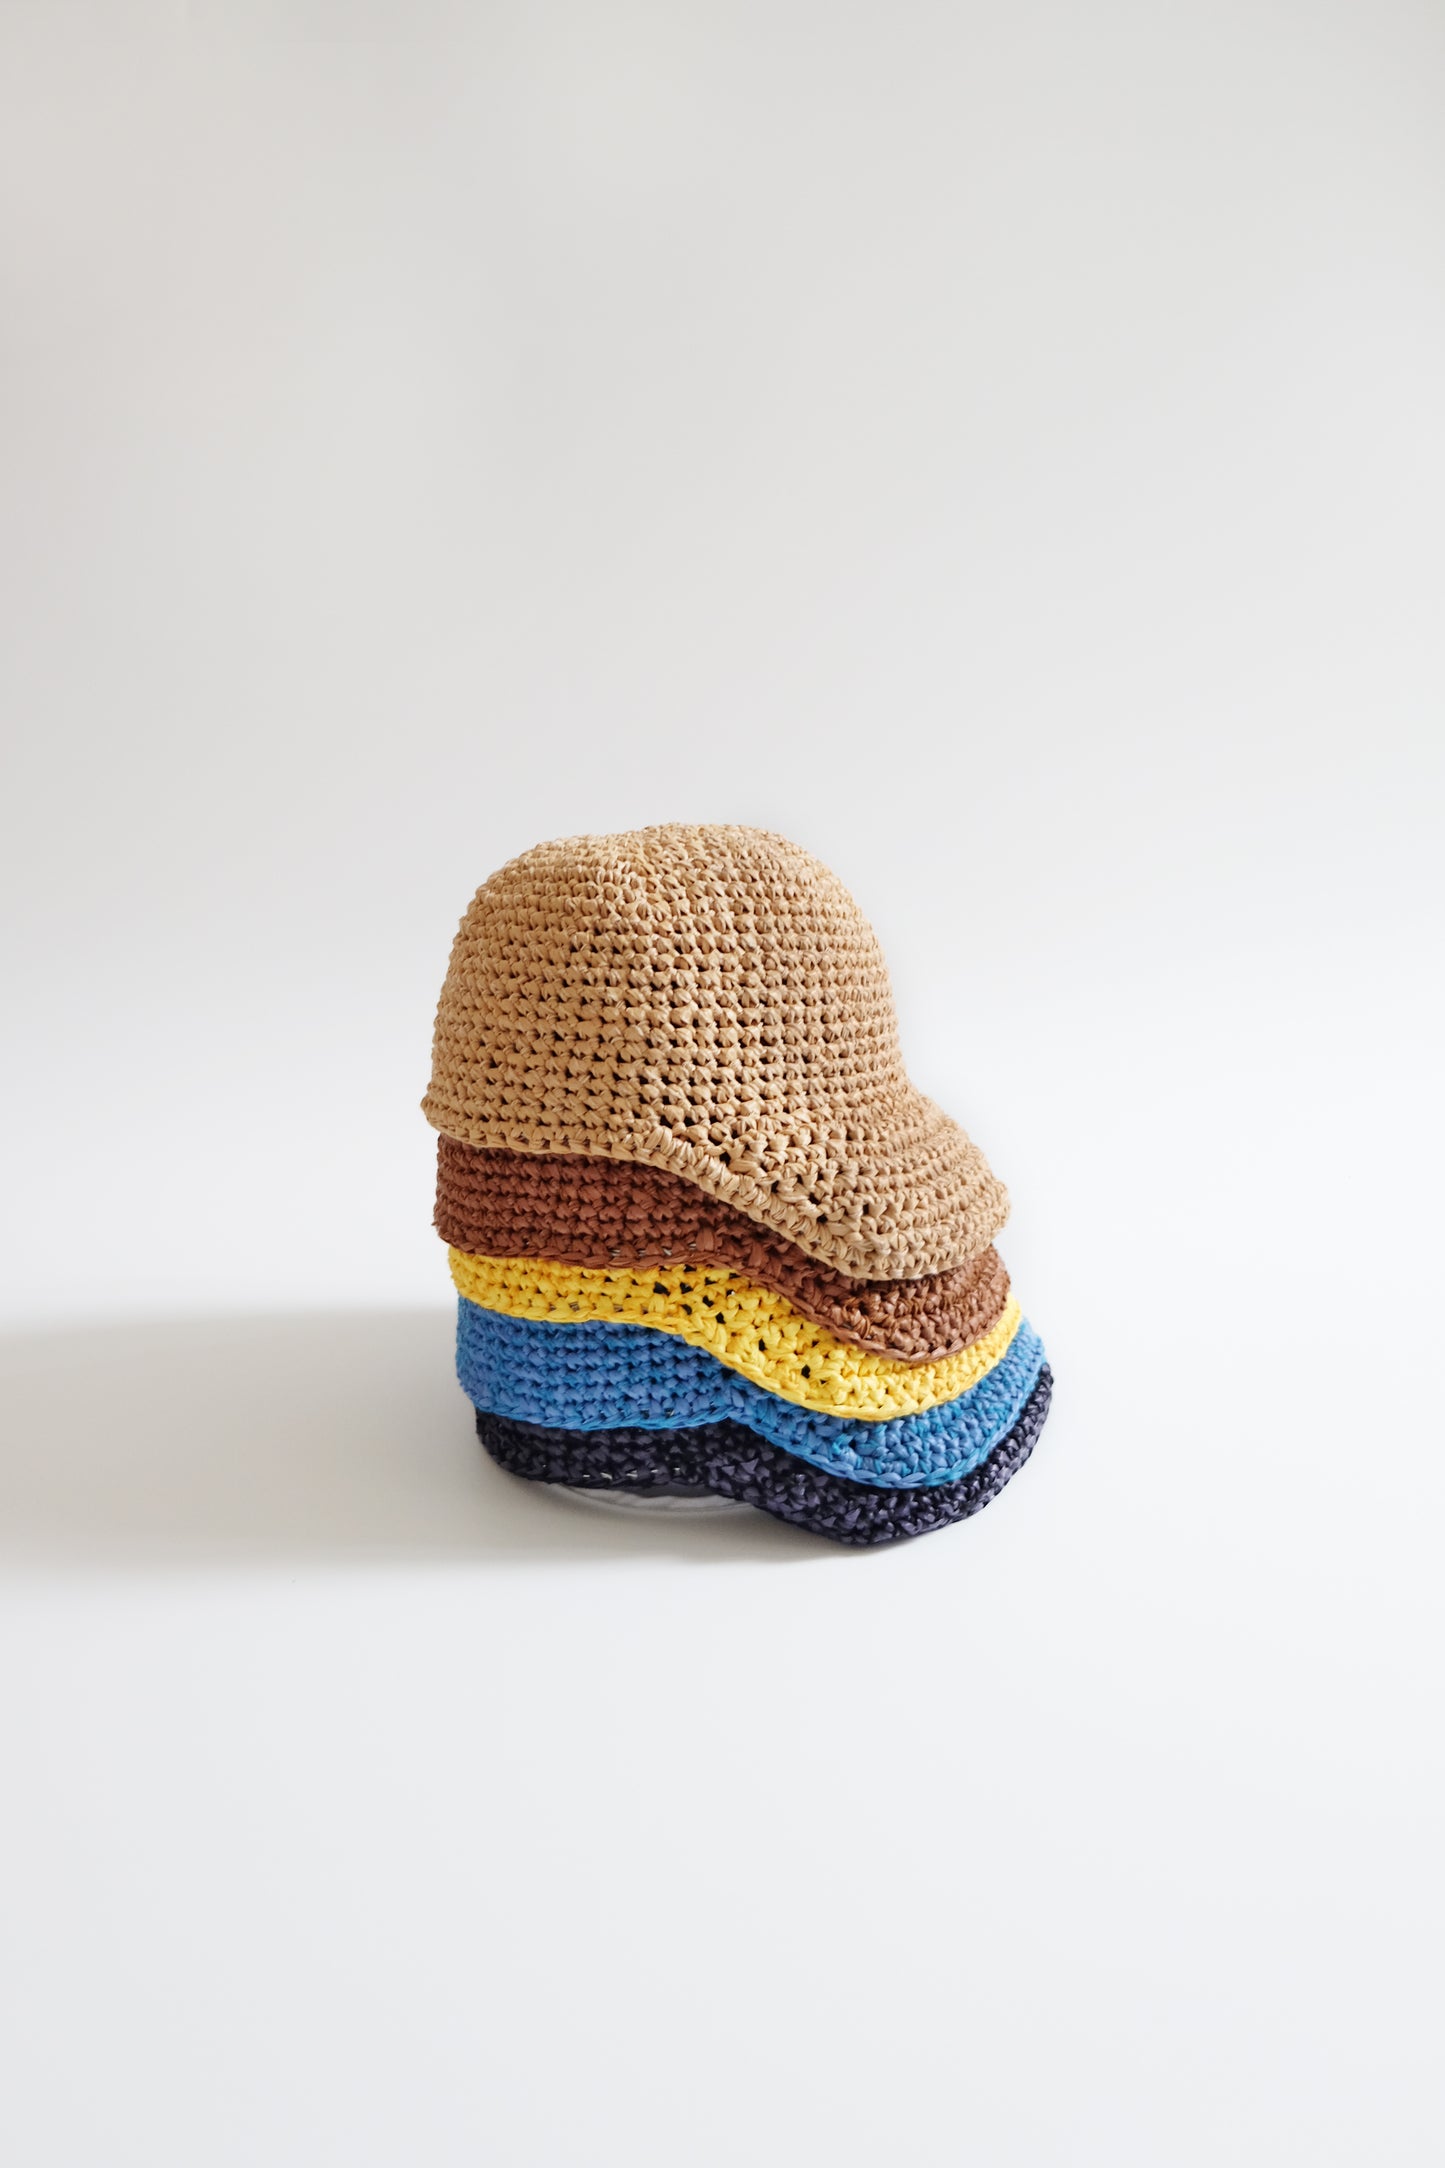 Crochet Baseball Cap Yellow